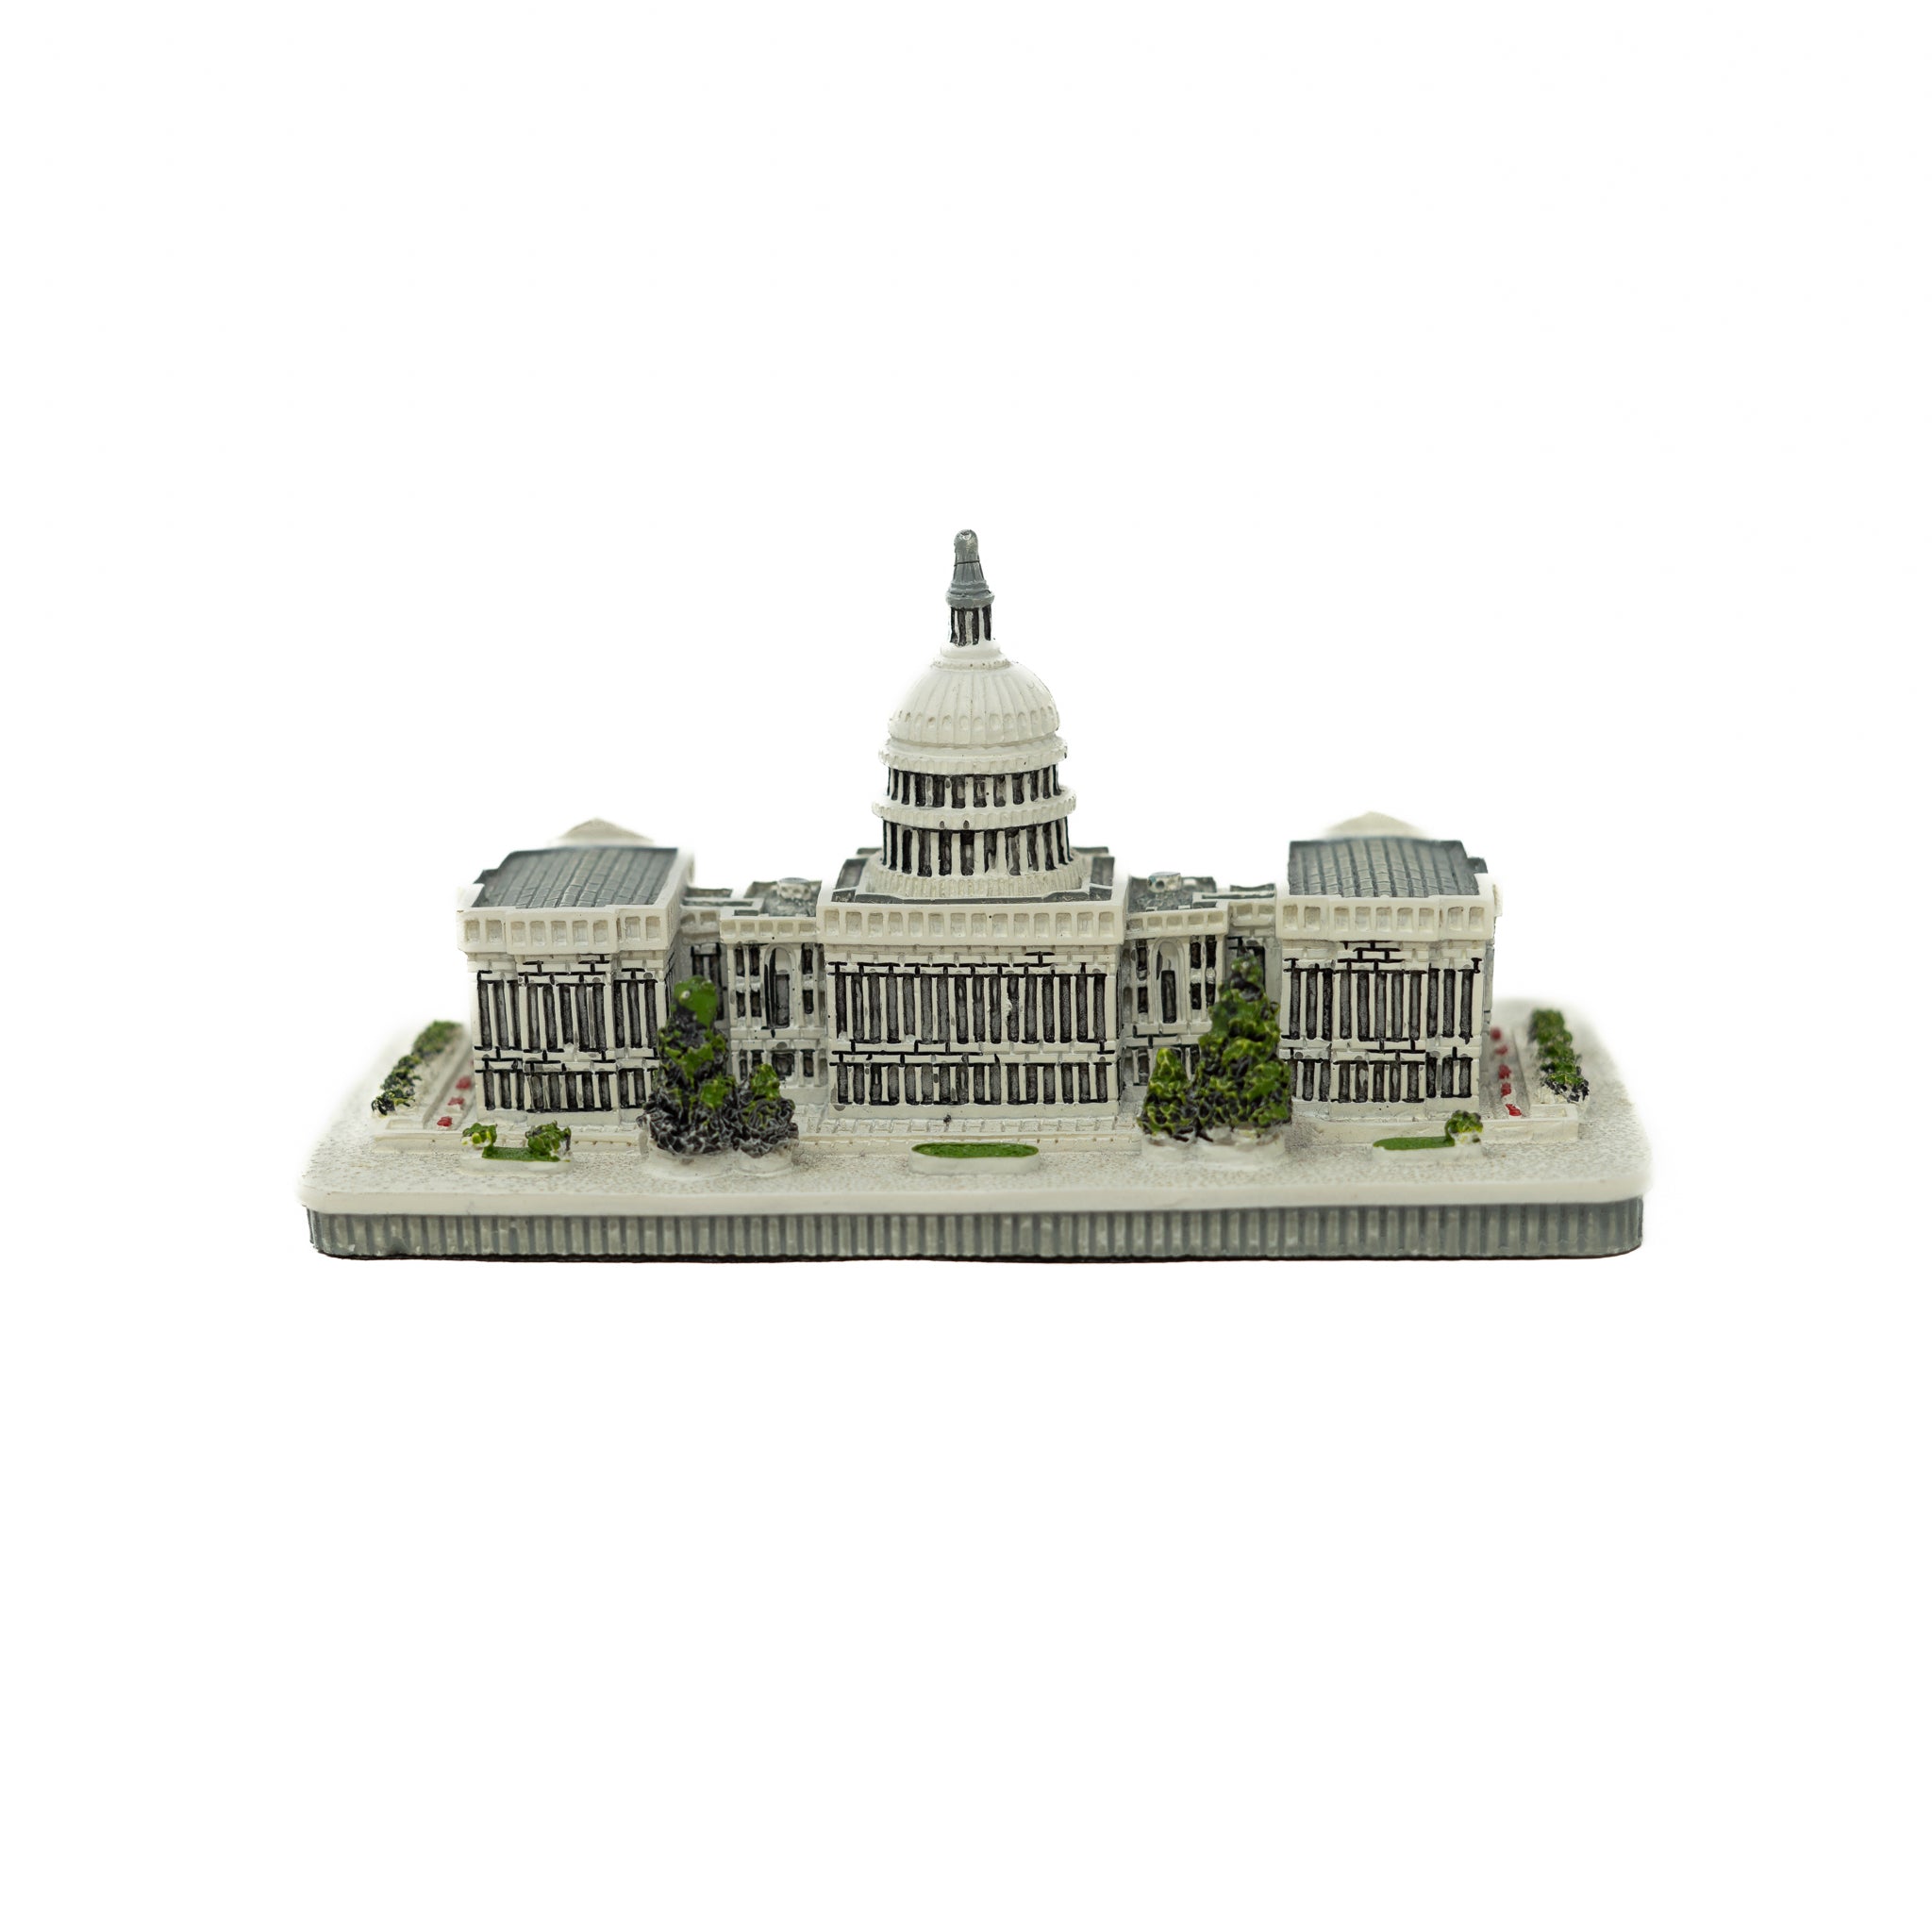 US Capitol Replica